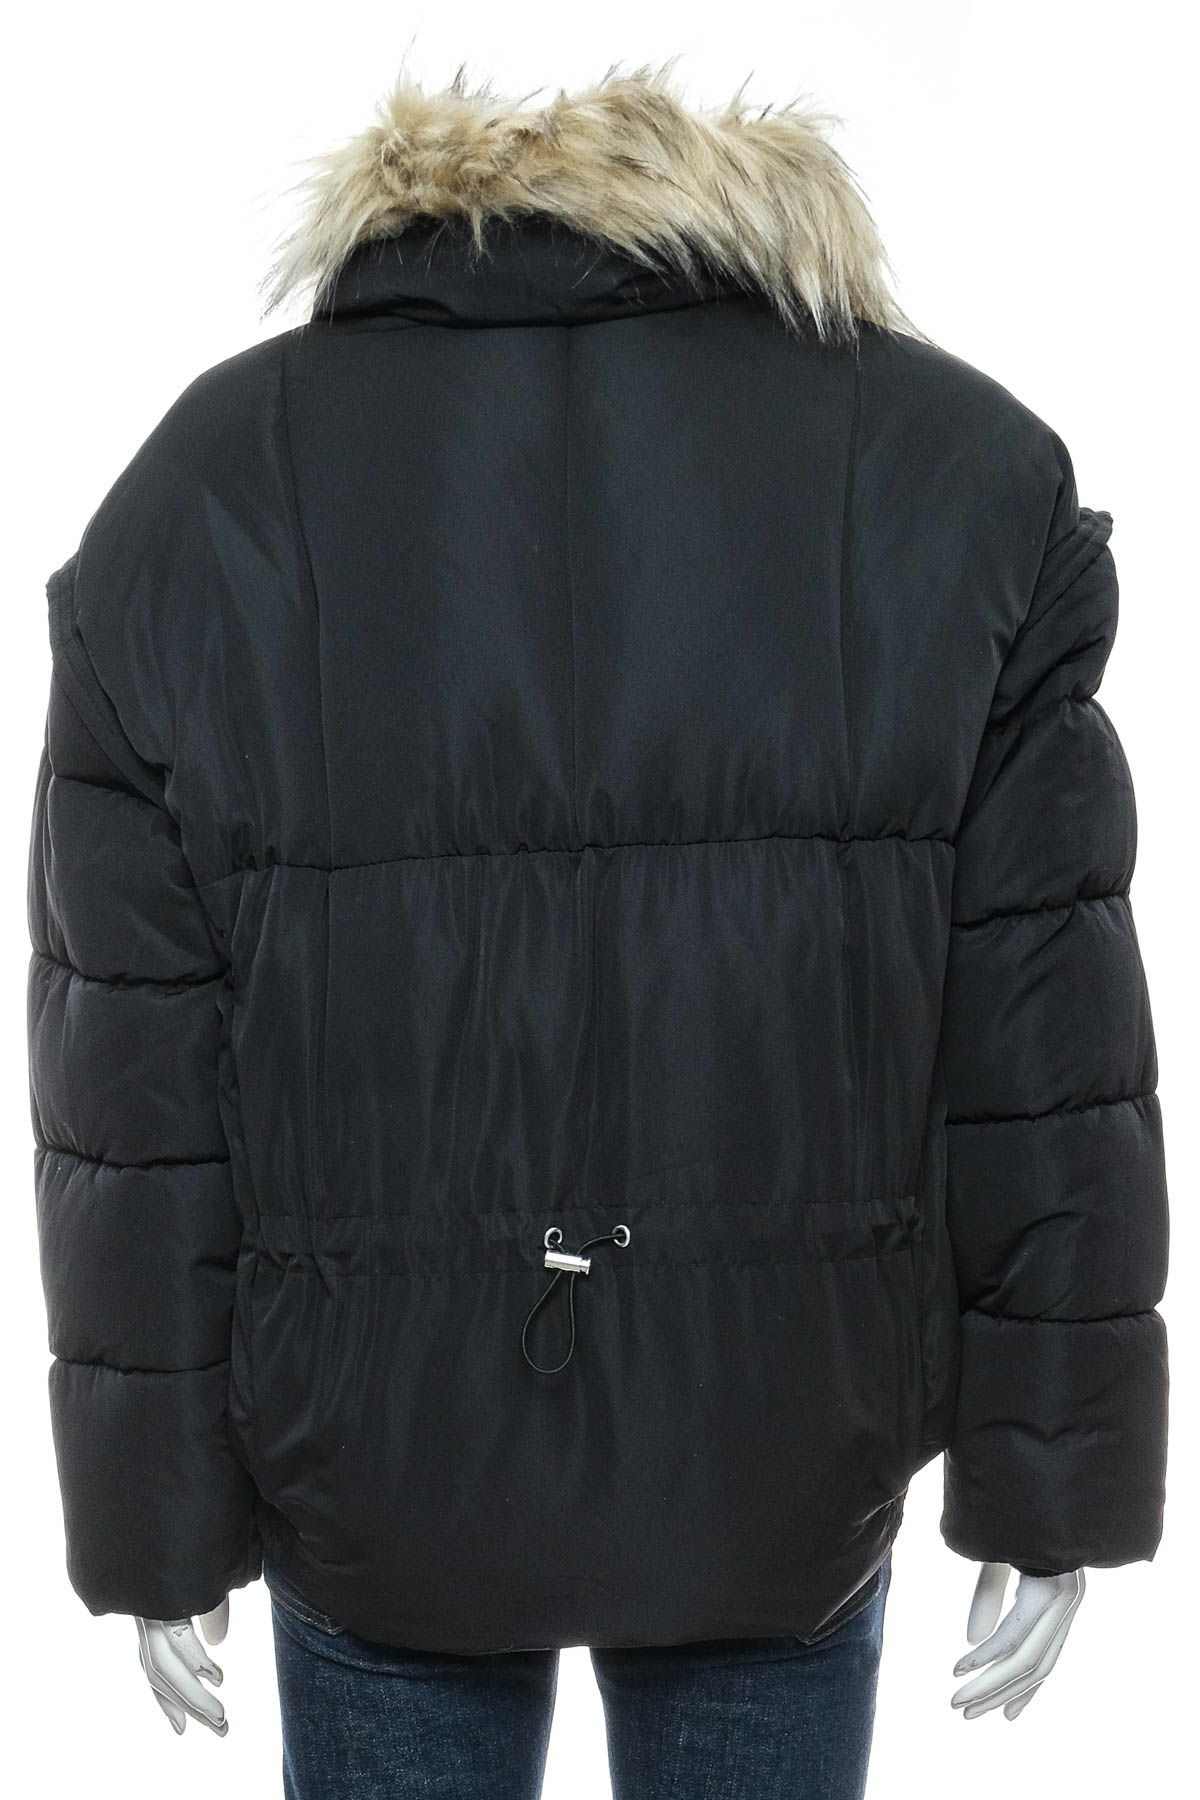 Female jacket - MISSGUIDED - 1